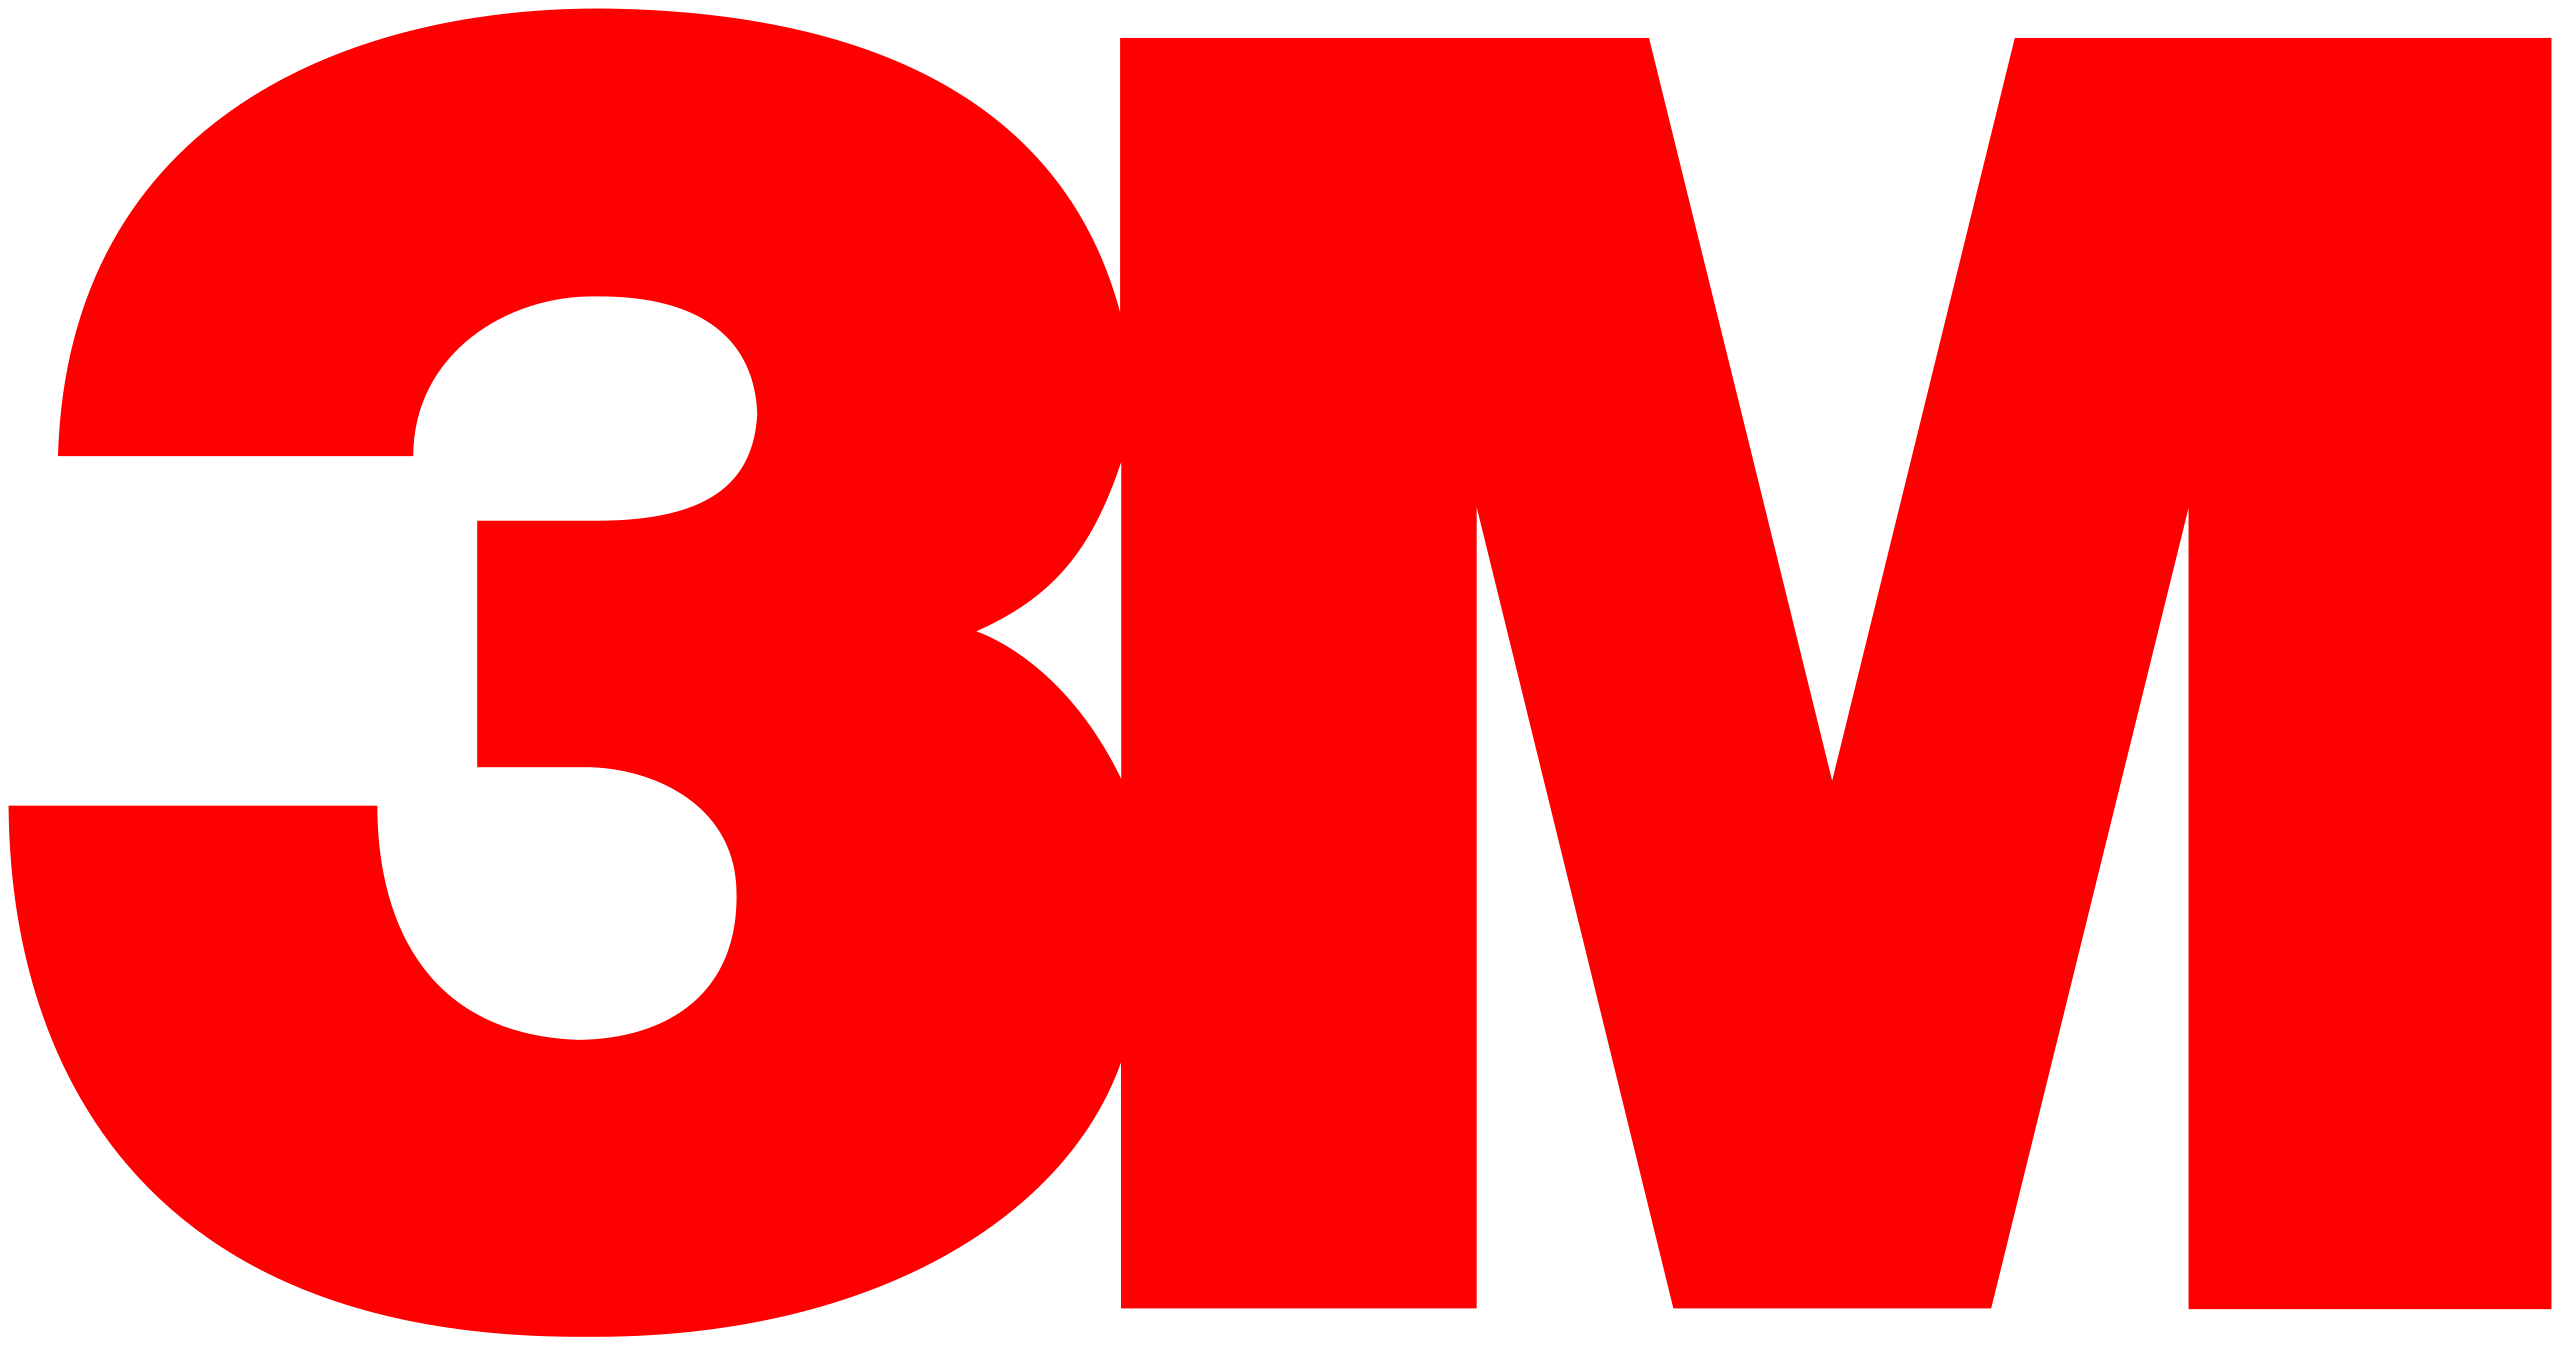 3M Company (Minnesota Mining and Manufacturing Company)